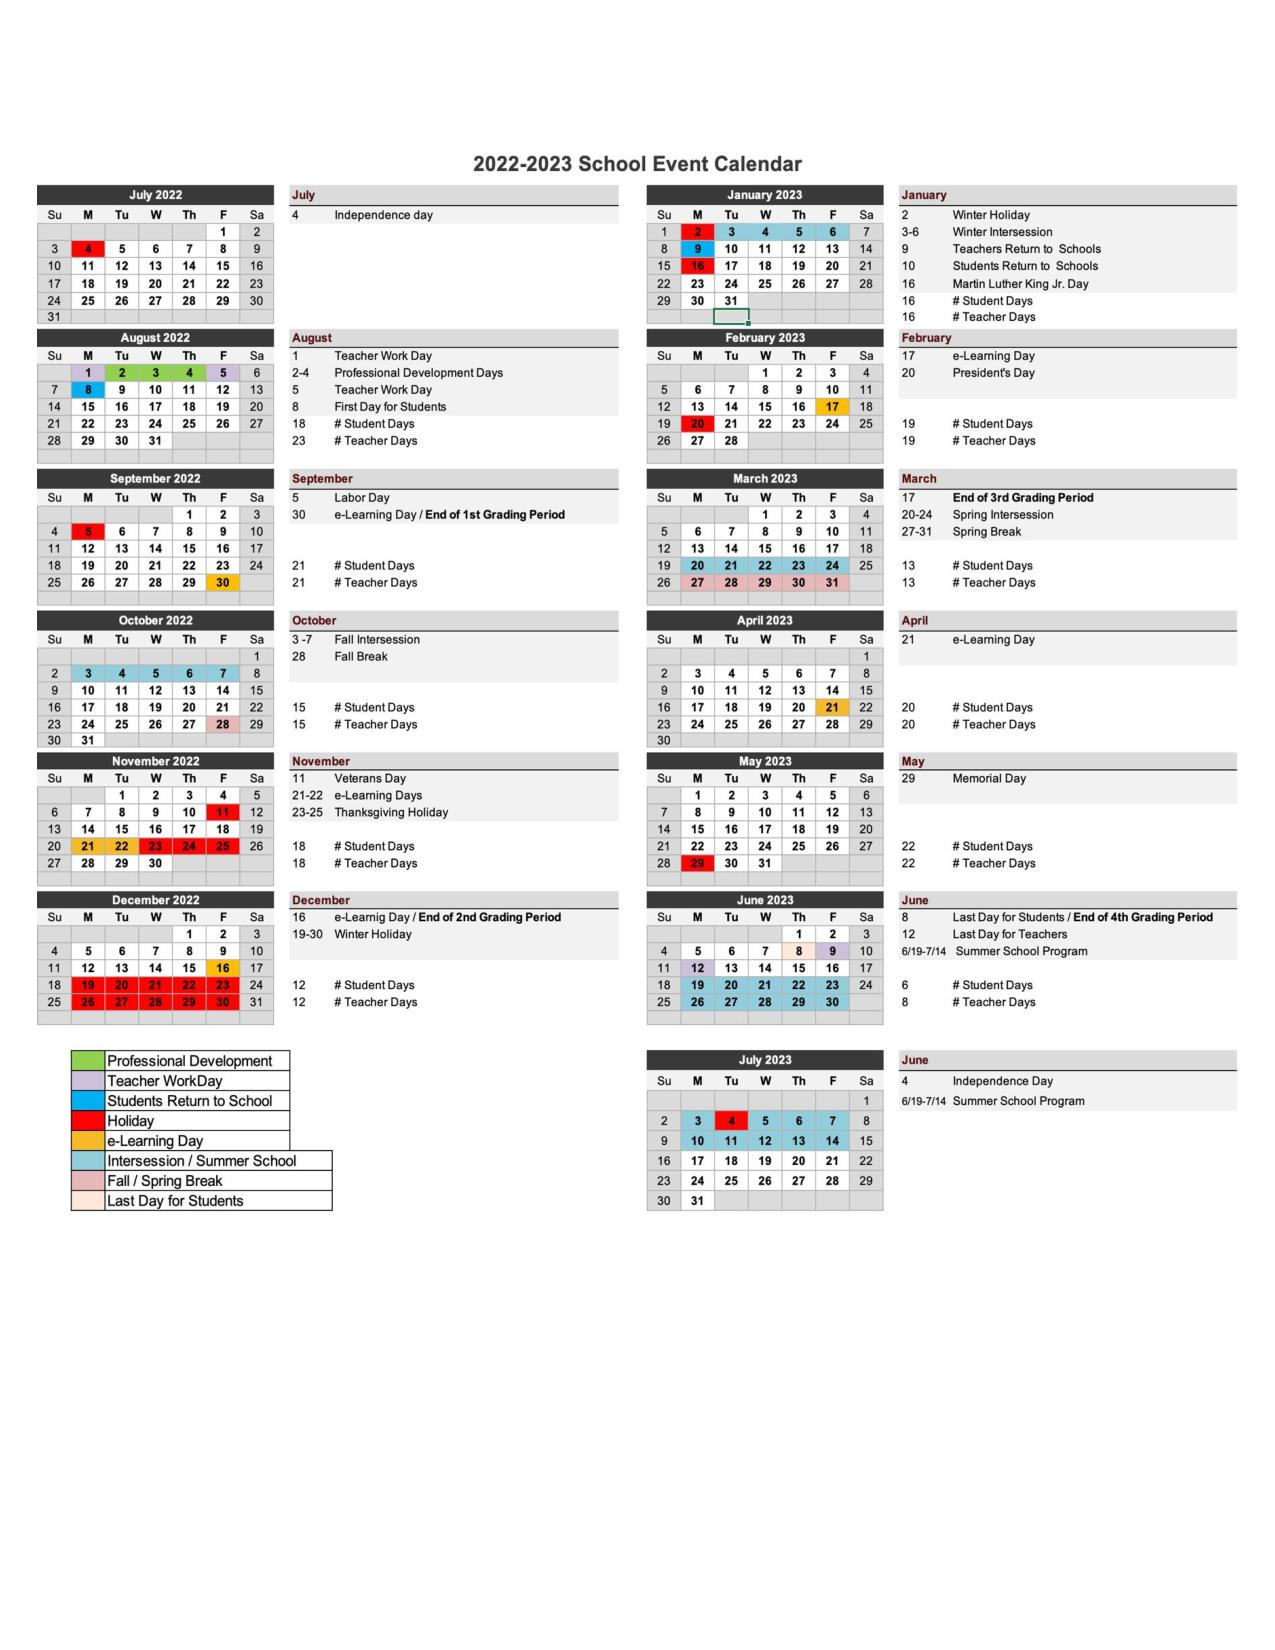 Birmingham City Schools Calendar 2022 2023 in PDF